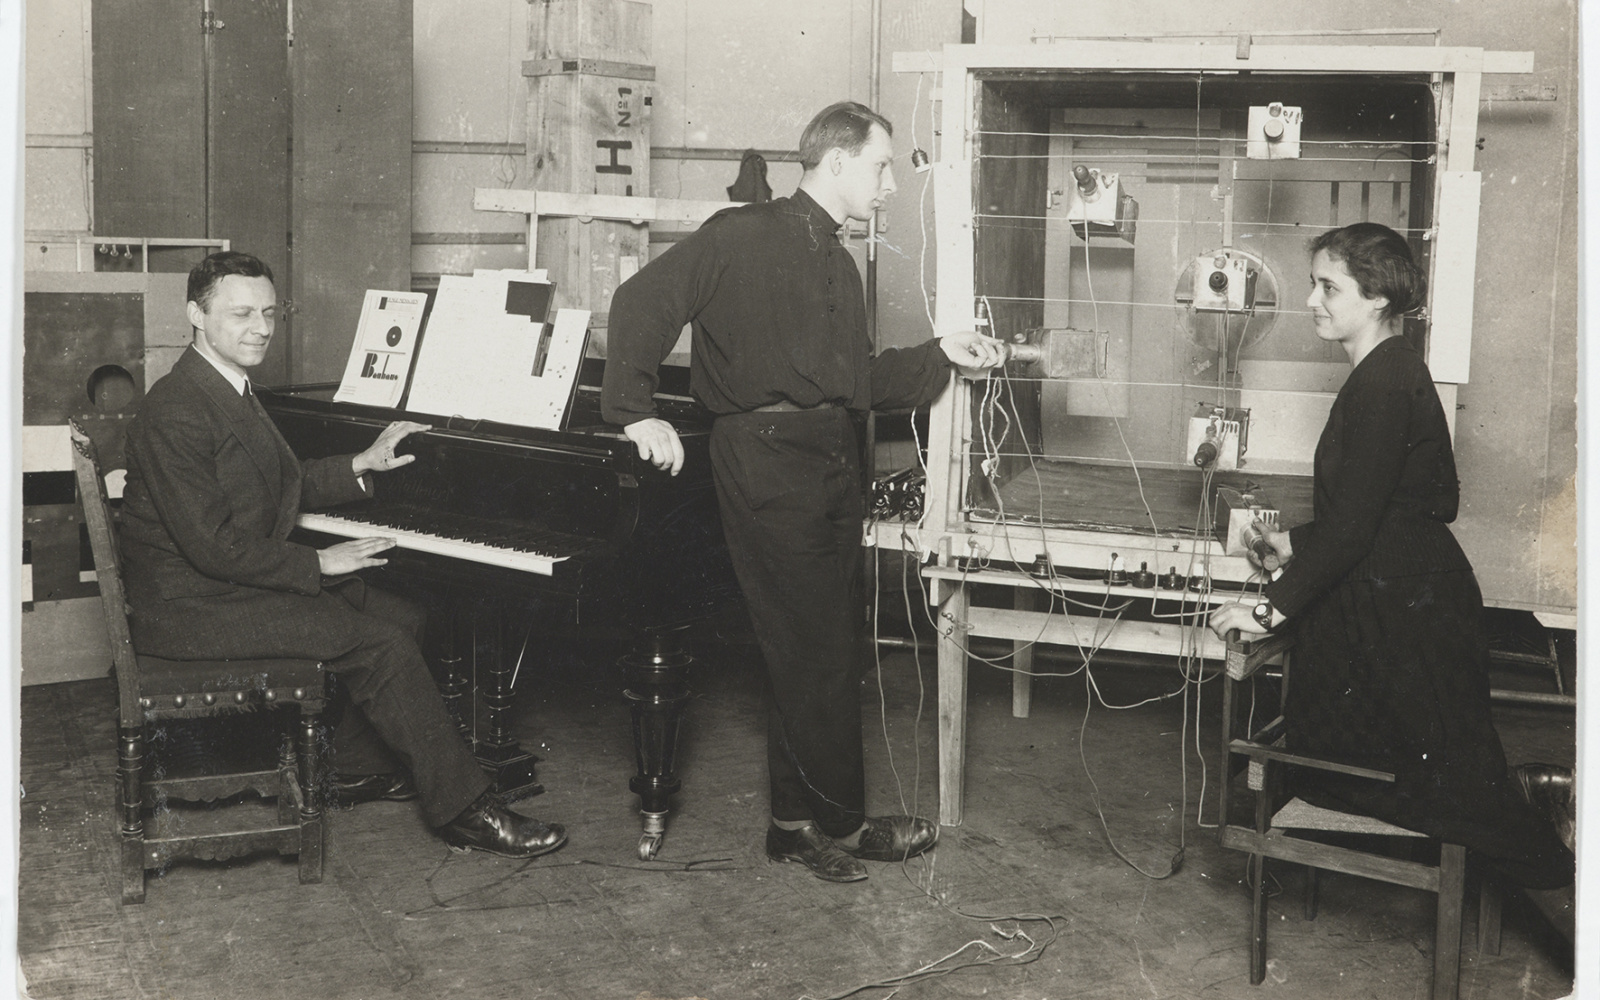 Ludwig Hirschfeld-Mack (l. at the piano), Theo Bogler (m.), Marli Heiman (r.) at the apparatus, at the performance of Kreuzspiel, c. 1924.